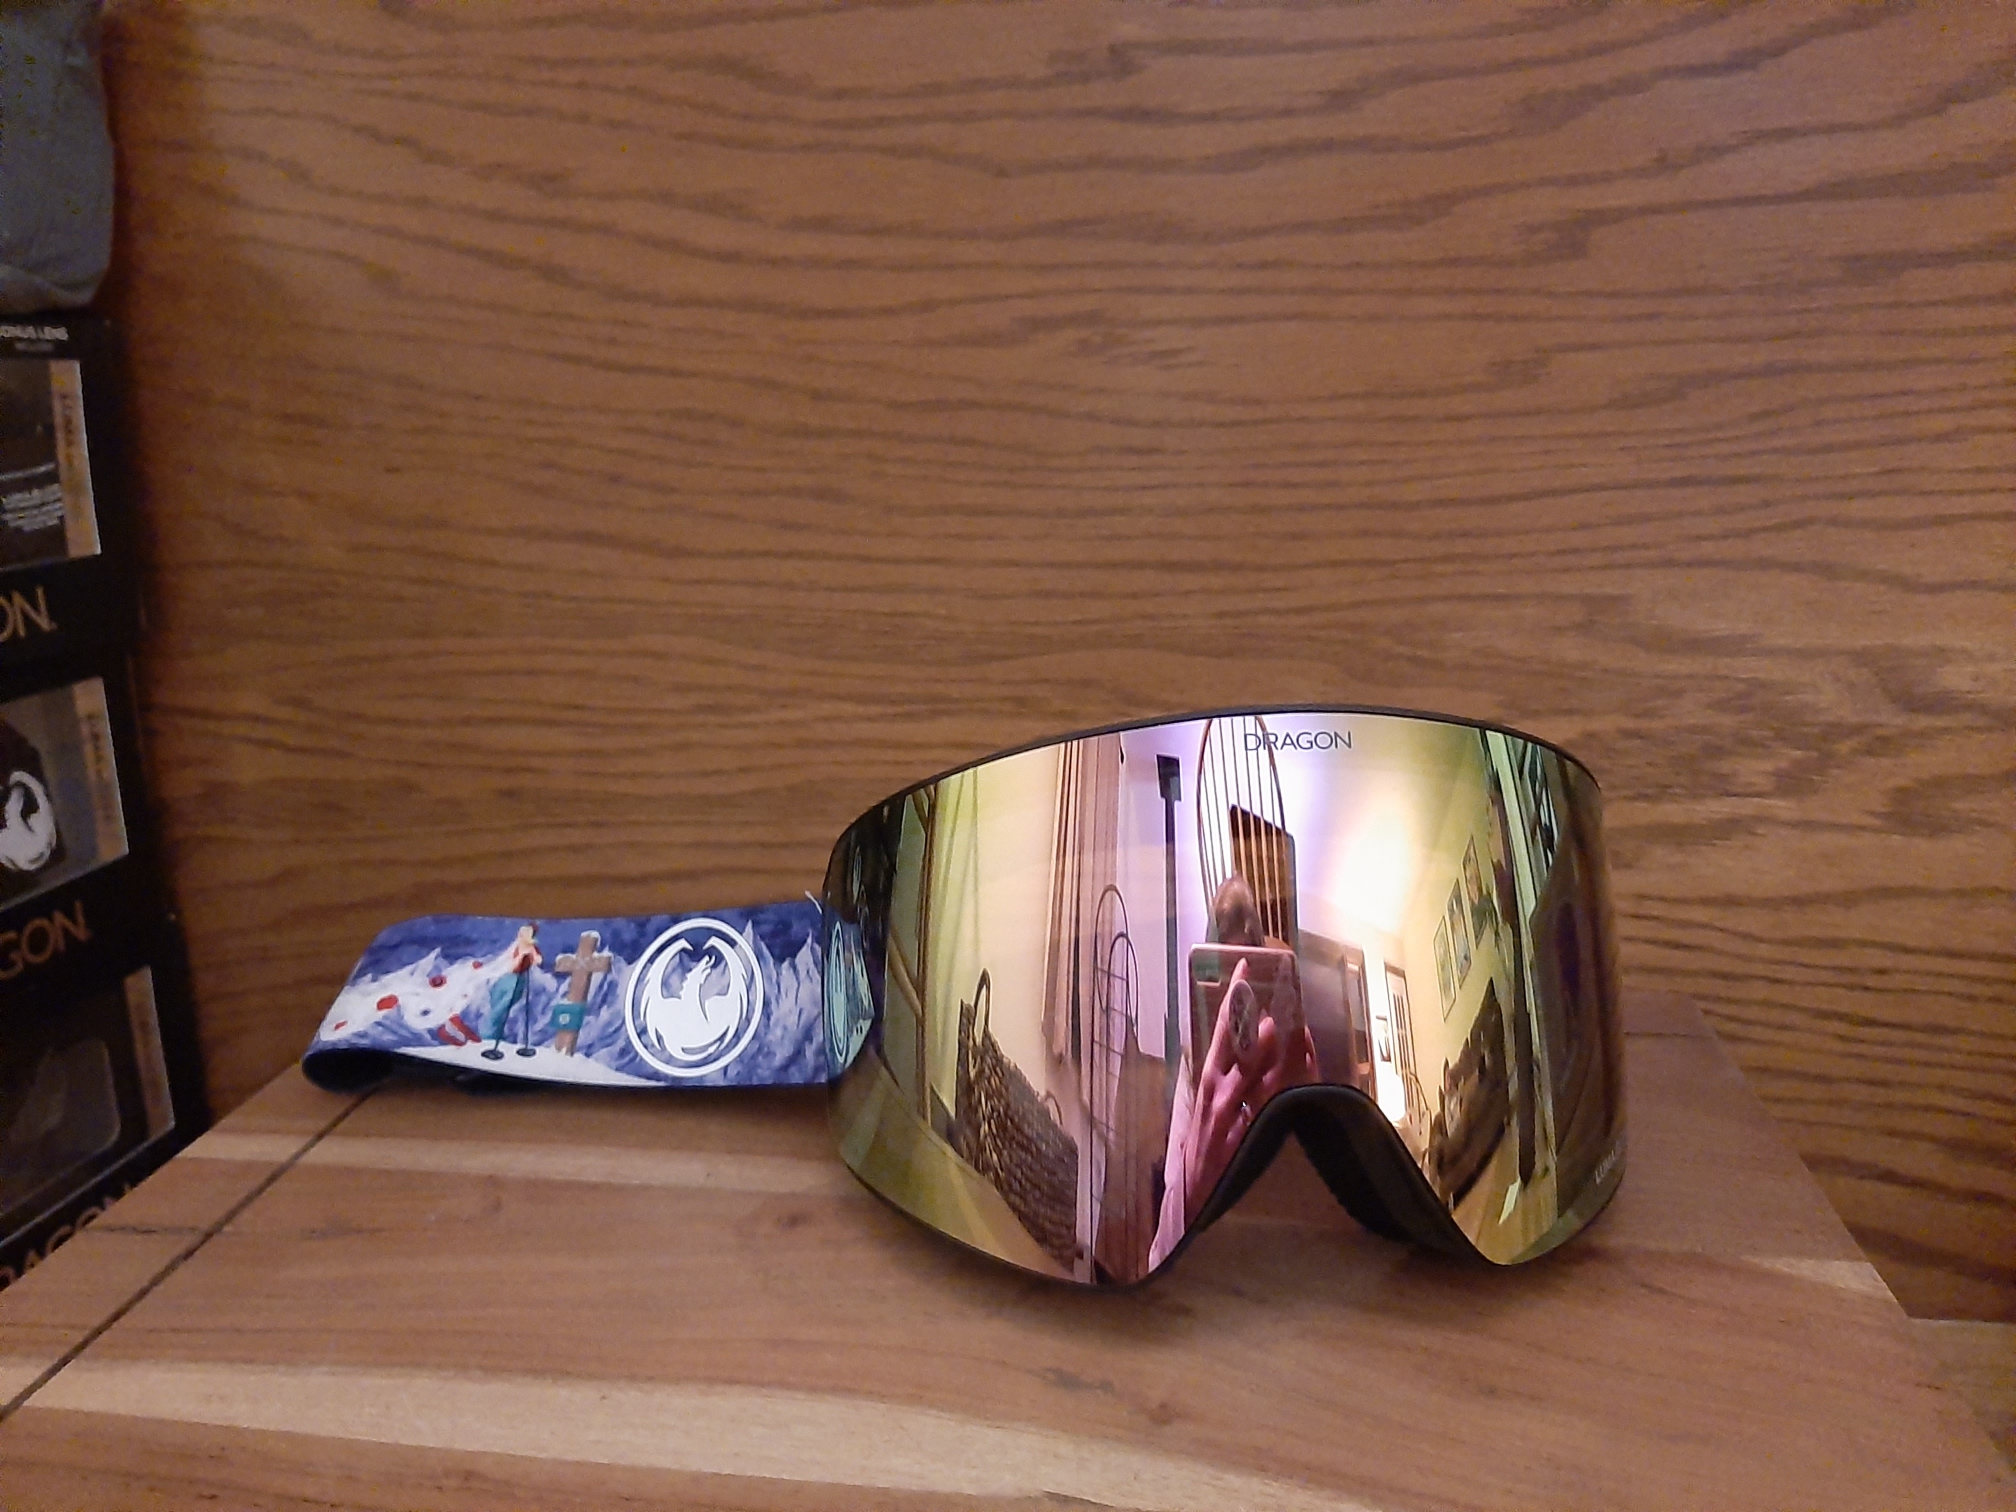 Dragon PXV Ski Goggles; Unisex; NEW; with Bonus Lens